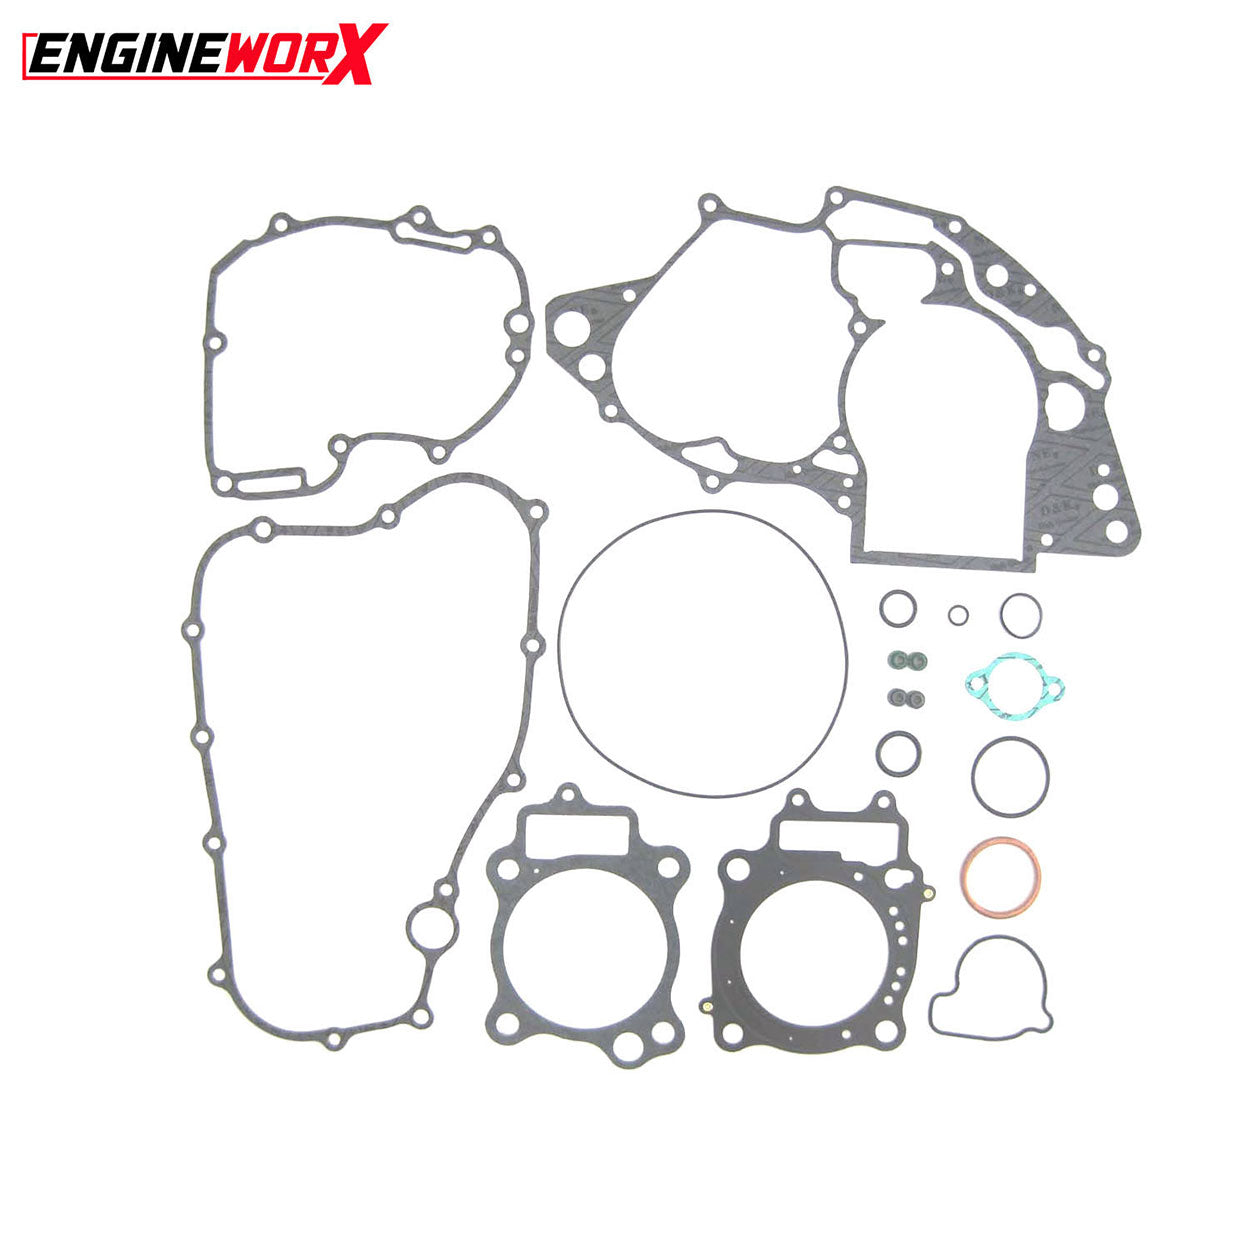 Engineworx Full Gasket Kit Honda CRF 250R 08-09